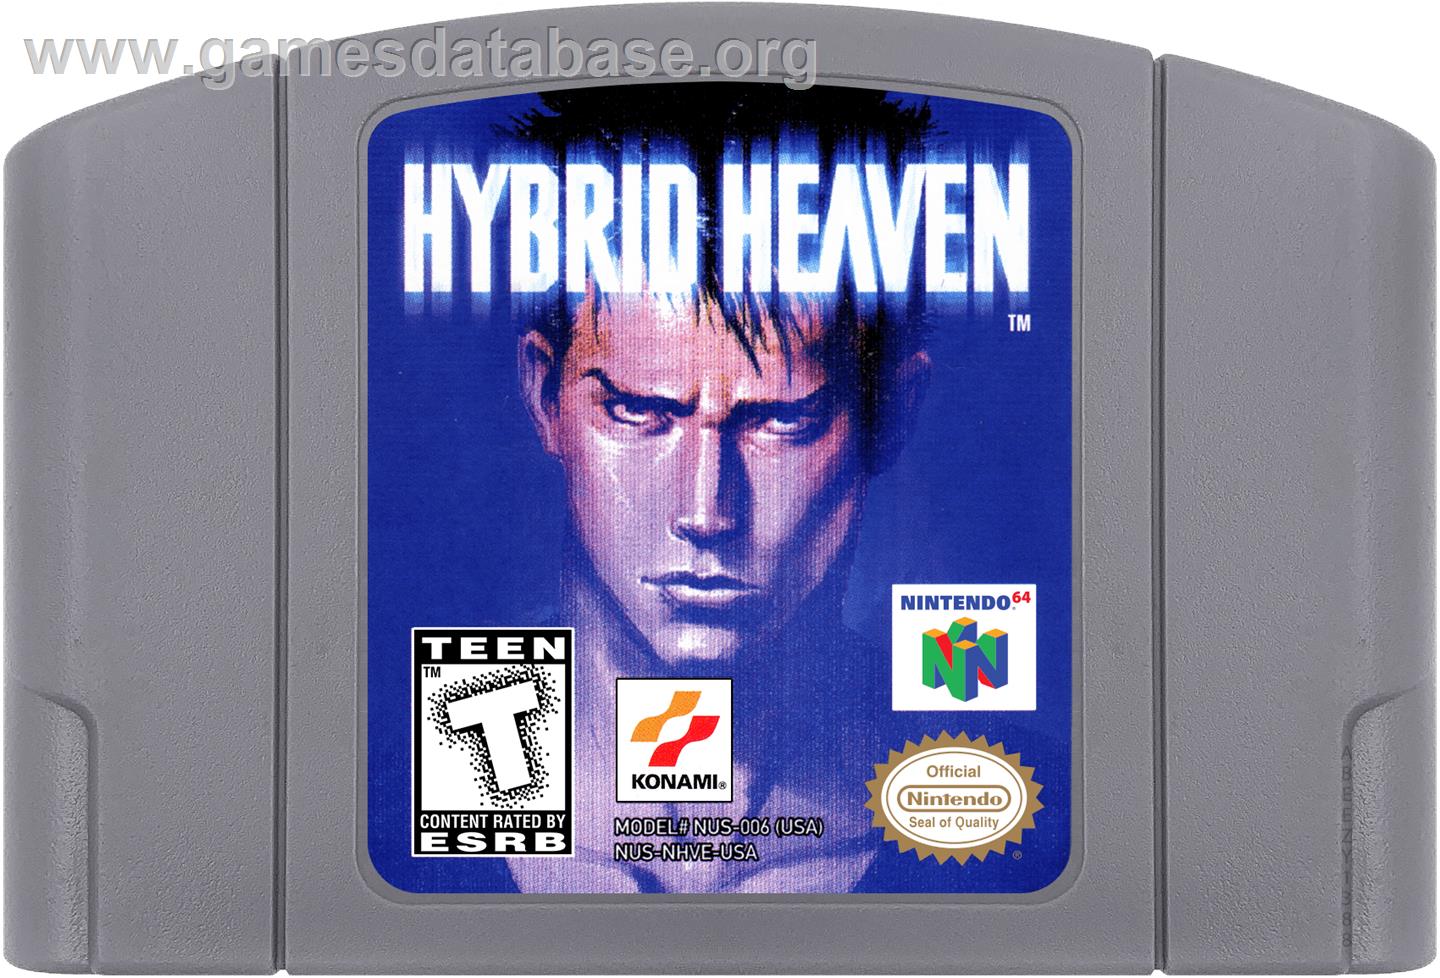 Hybrid Heaven - Nintendo N64 - Artwork - Cartridge